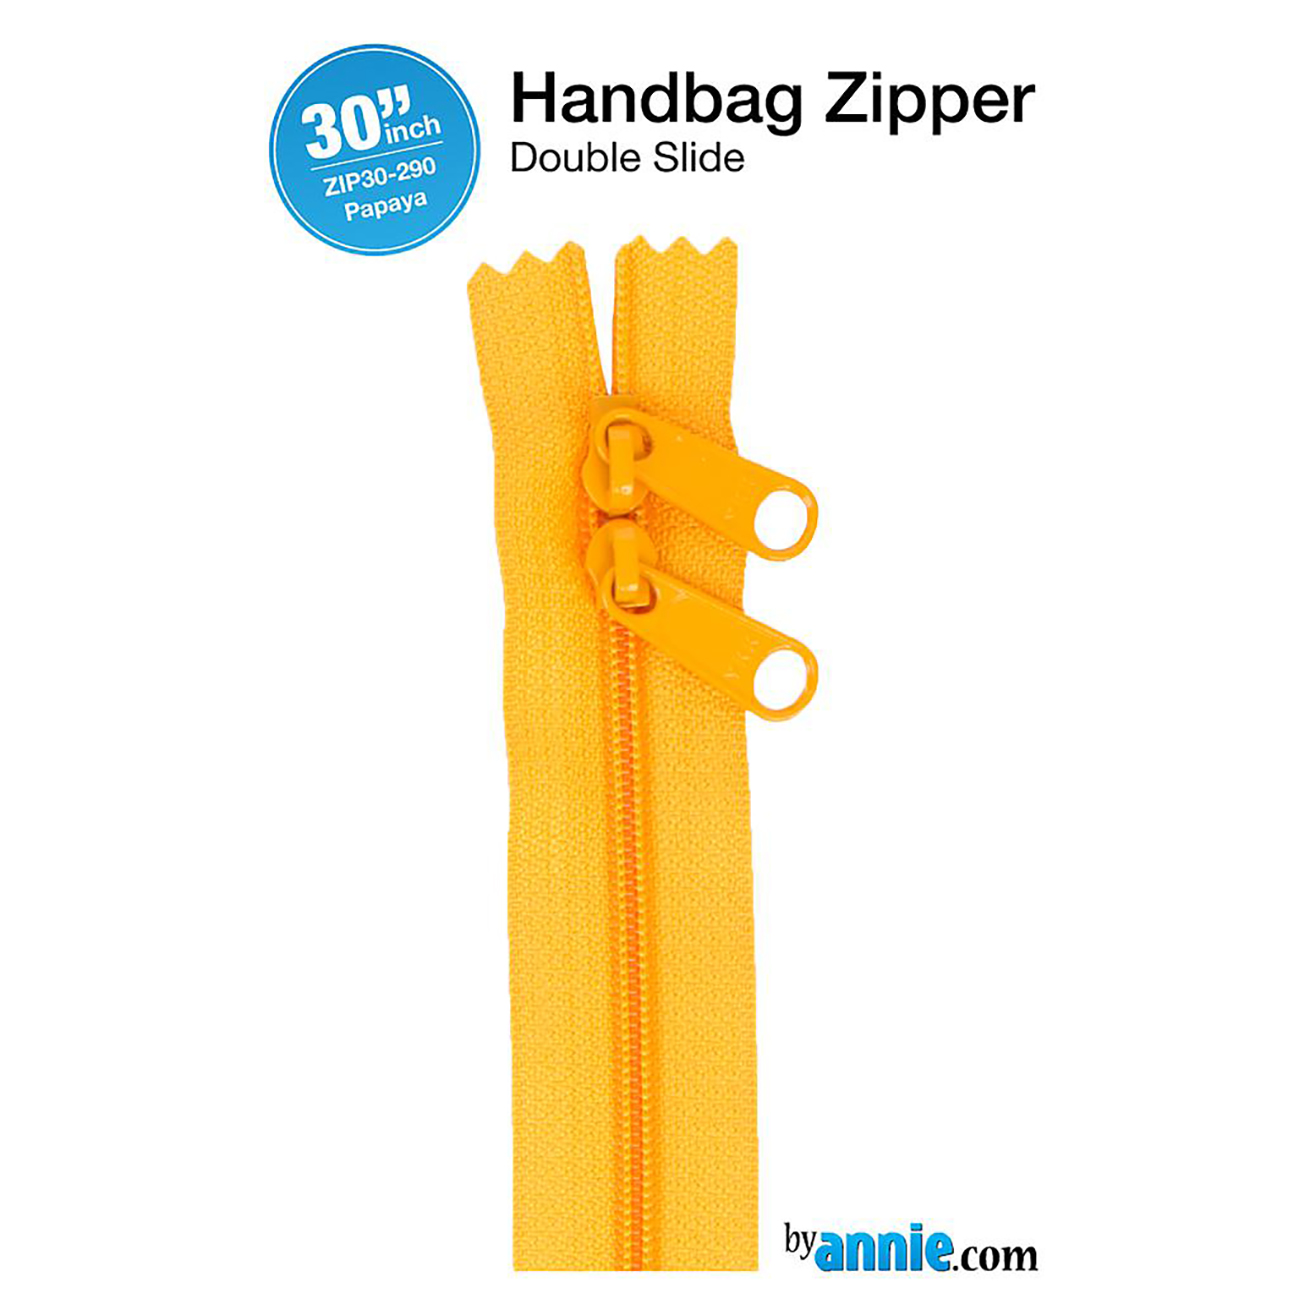 Handbag zipper 30inch-papaya 290